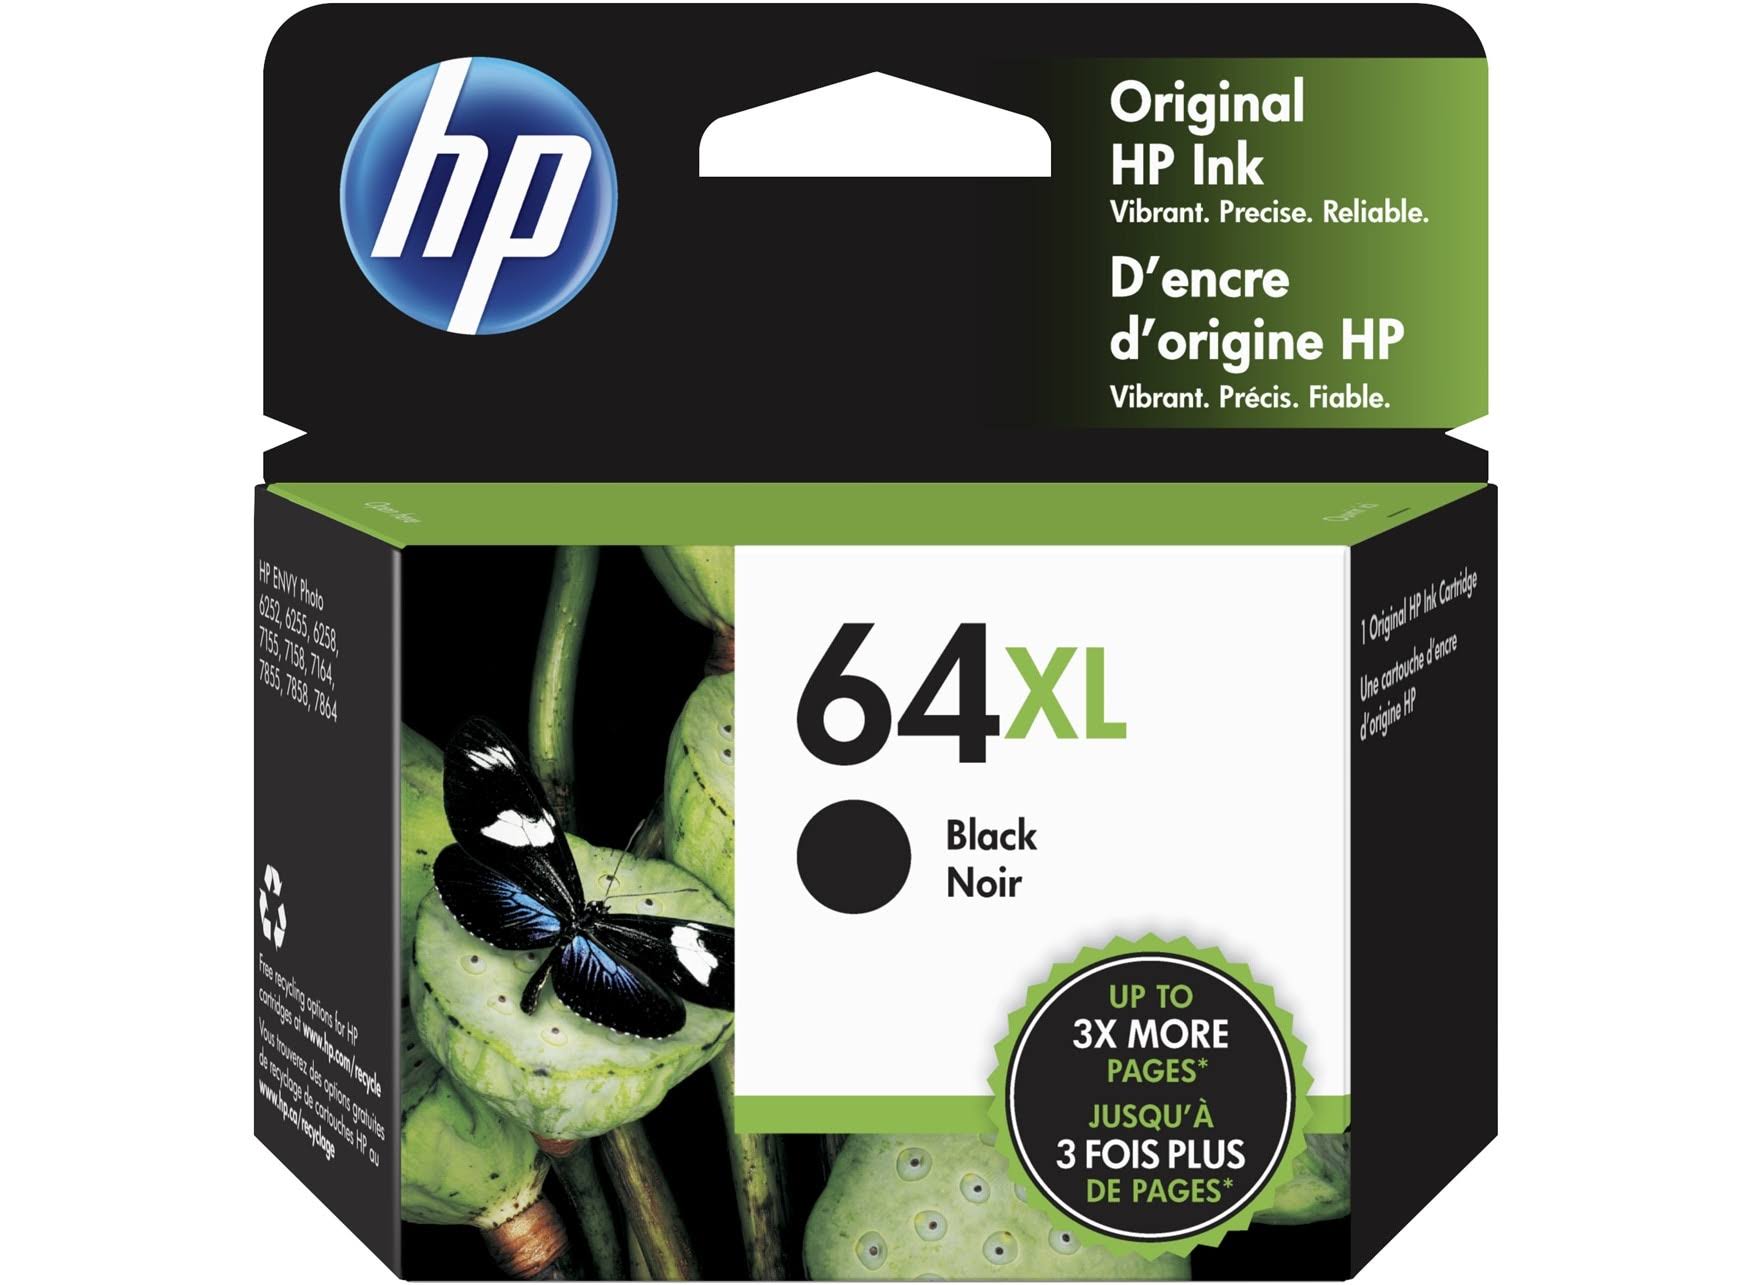 HP 64XL High Yield Original Single Ink Cartridge - 600 Page Yield, Black Noir